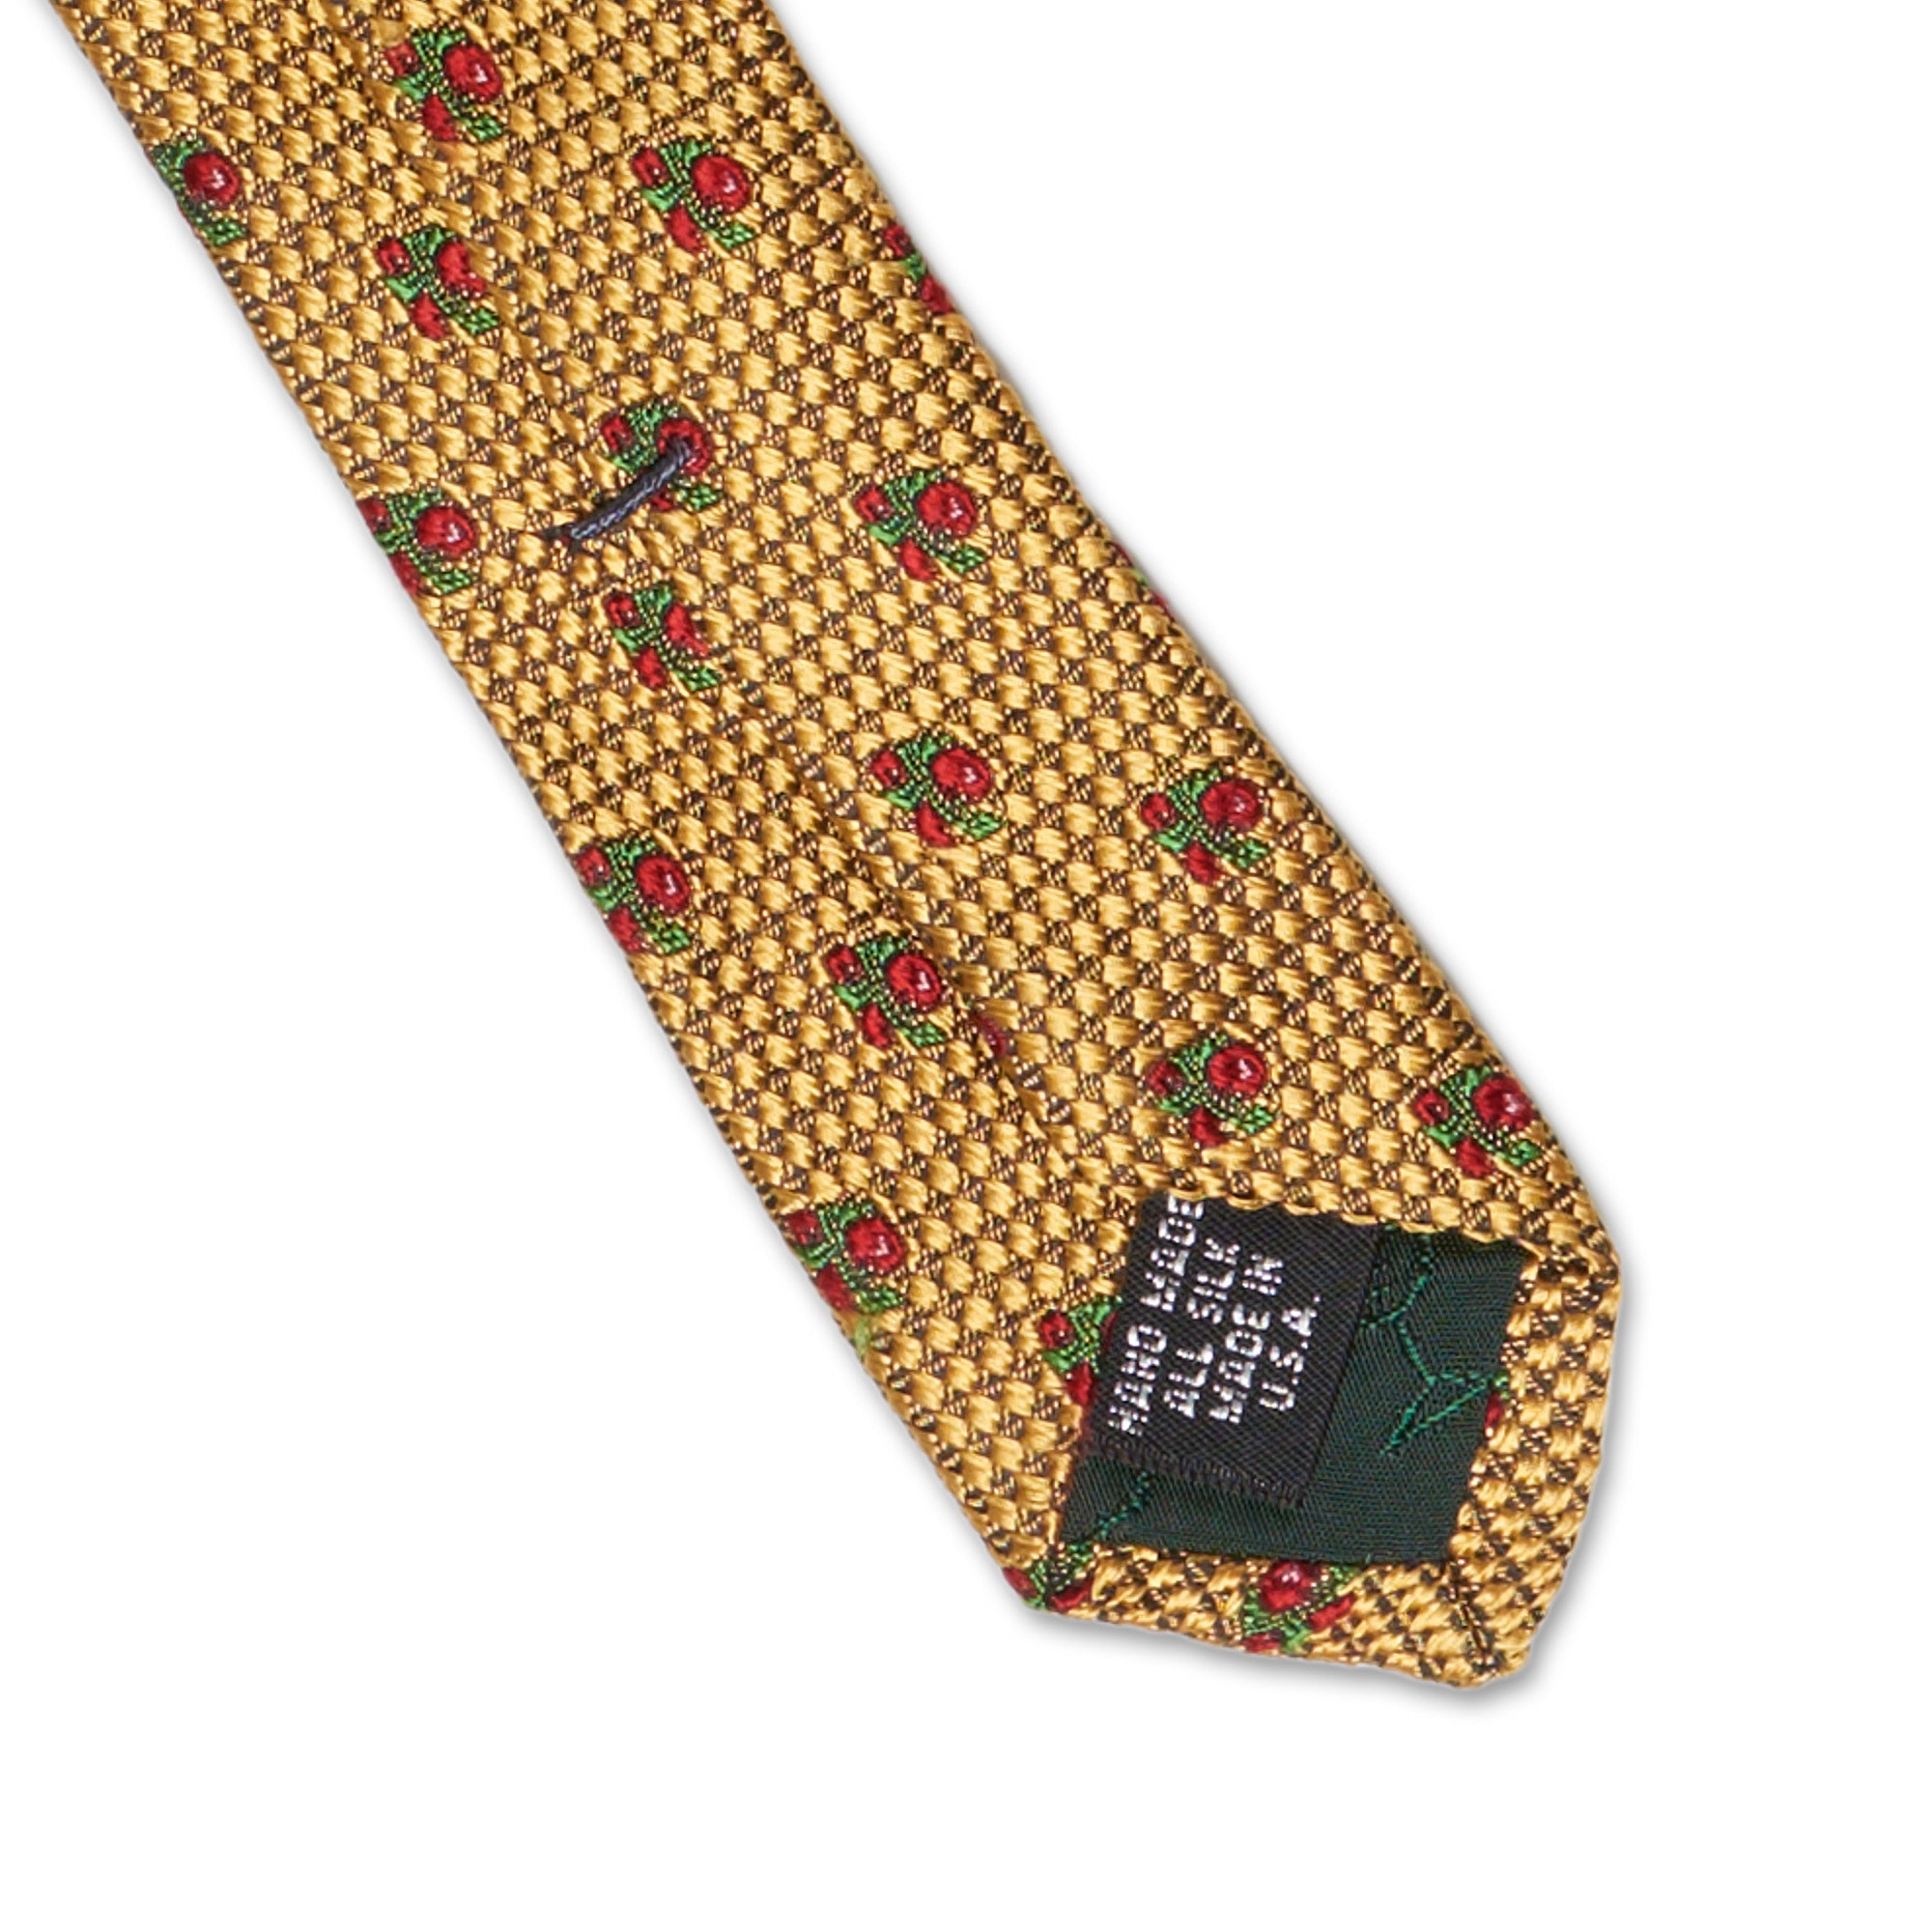 JAY KOS New York Handmade Yellow Macro-Design Silk Tie